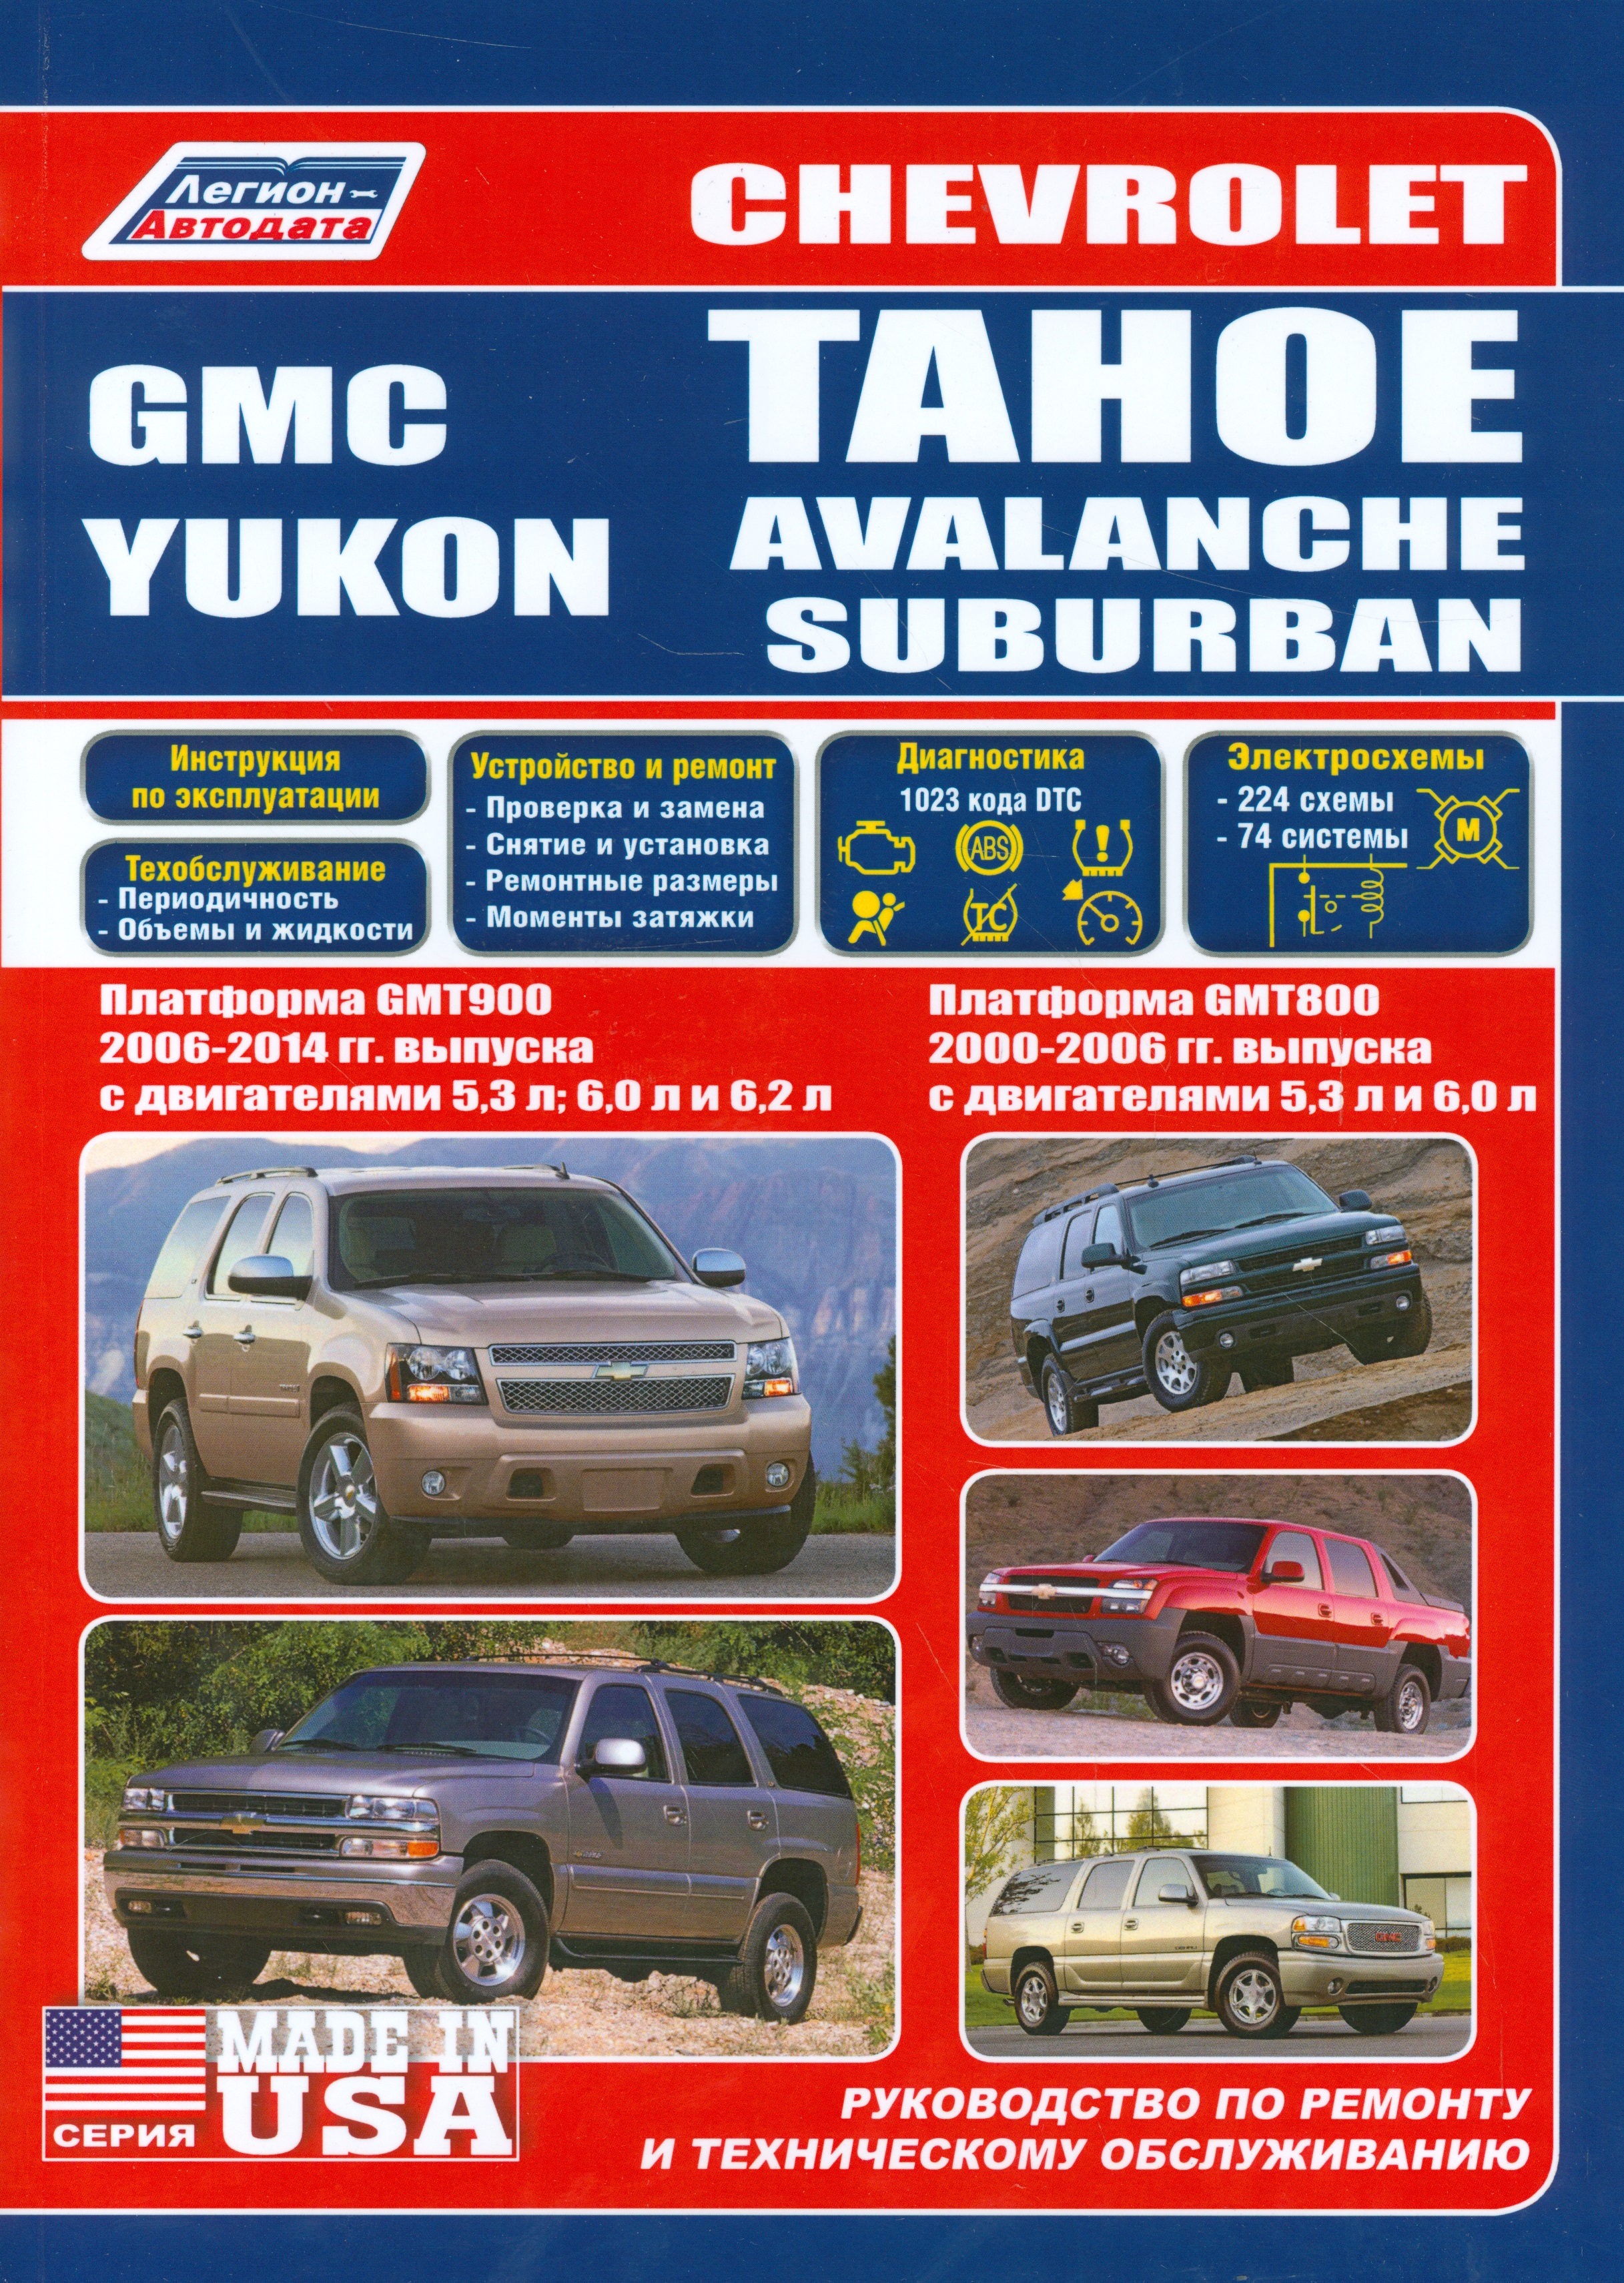 Chevrolet Tahoe. Avalanche, Suburban GMC Yukon.  GMT800 2000-2006 .    5, 3 .  6, 0 .  GMT900 2006-2014 .    5, 3 ., 6, 0 ., 6, 2 .      